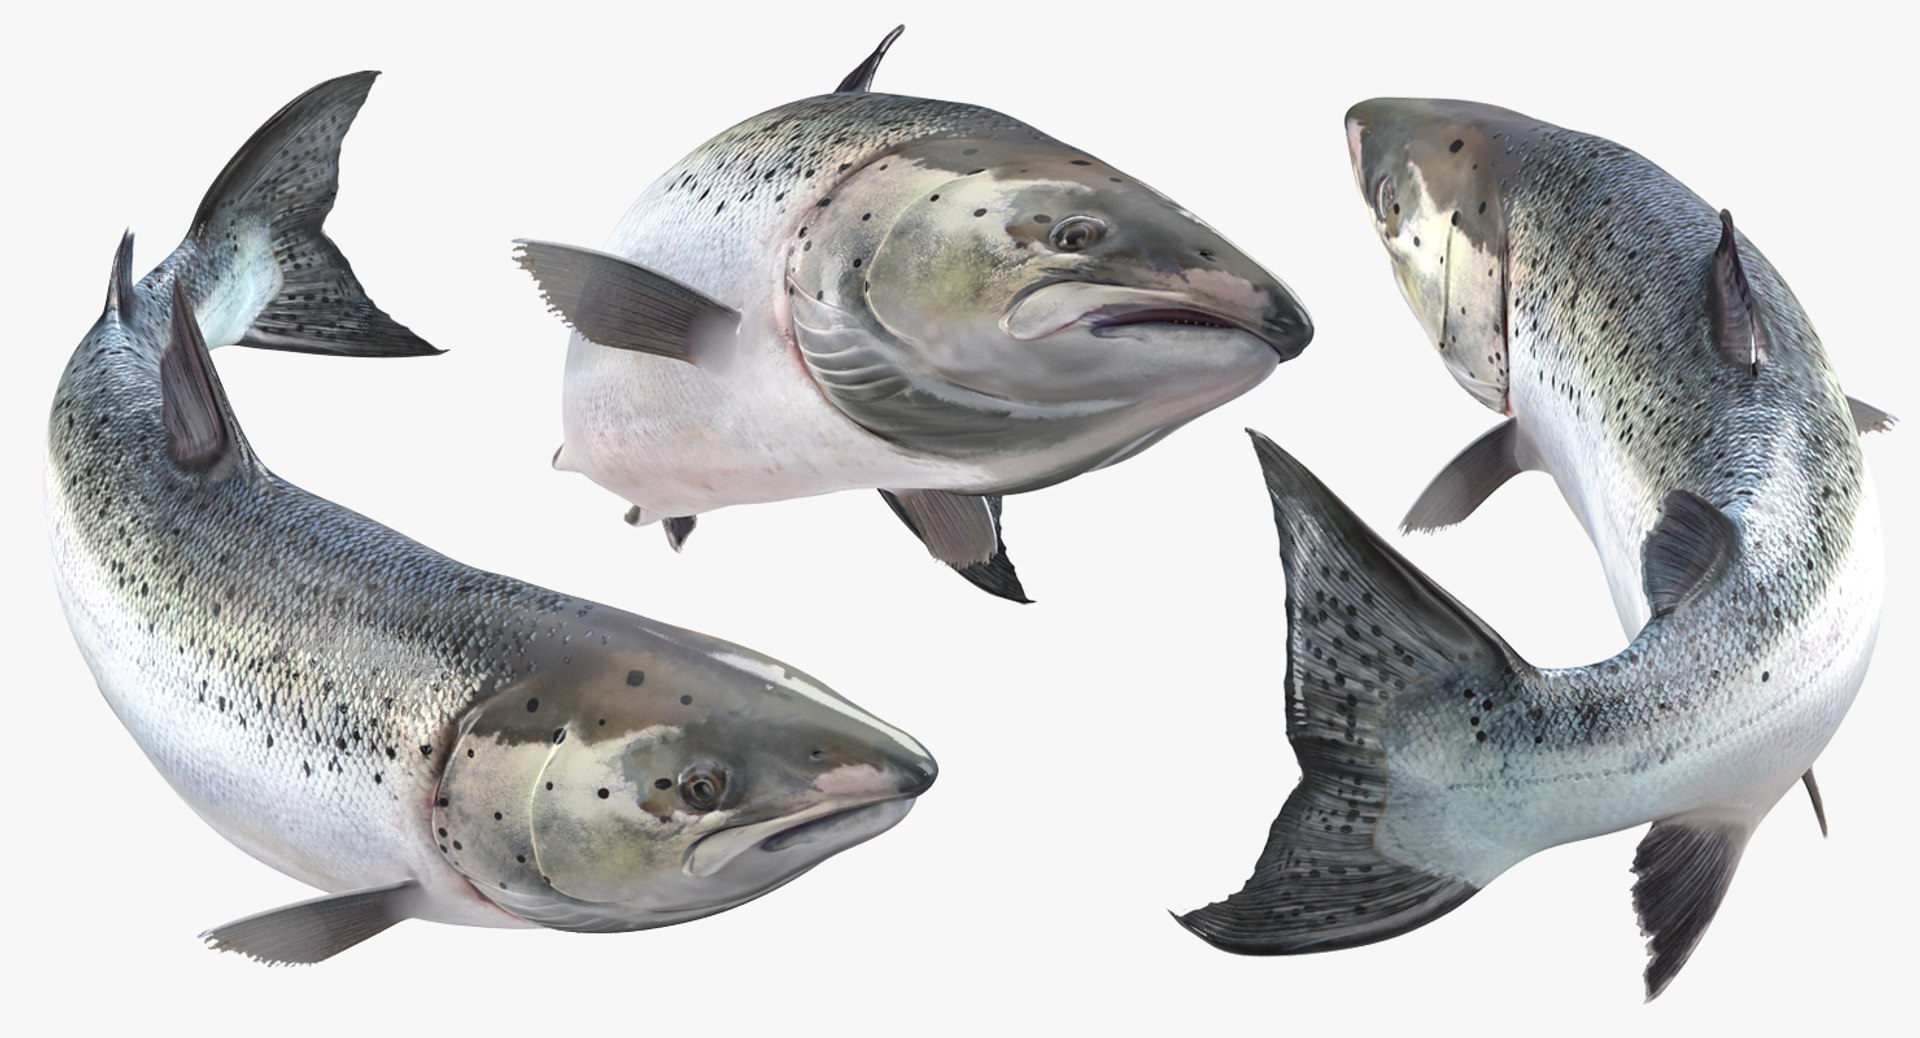 Can of Surstromming Fermented Fish 850g 3D model - TurboSquid 2152158